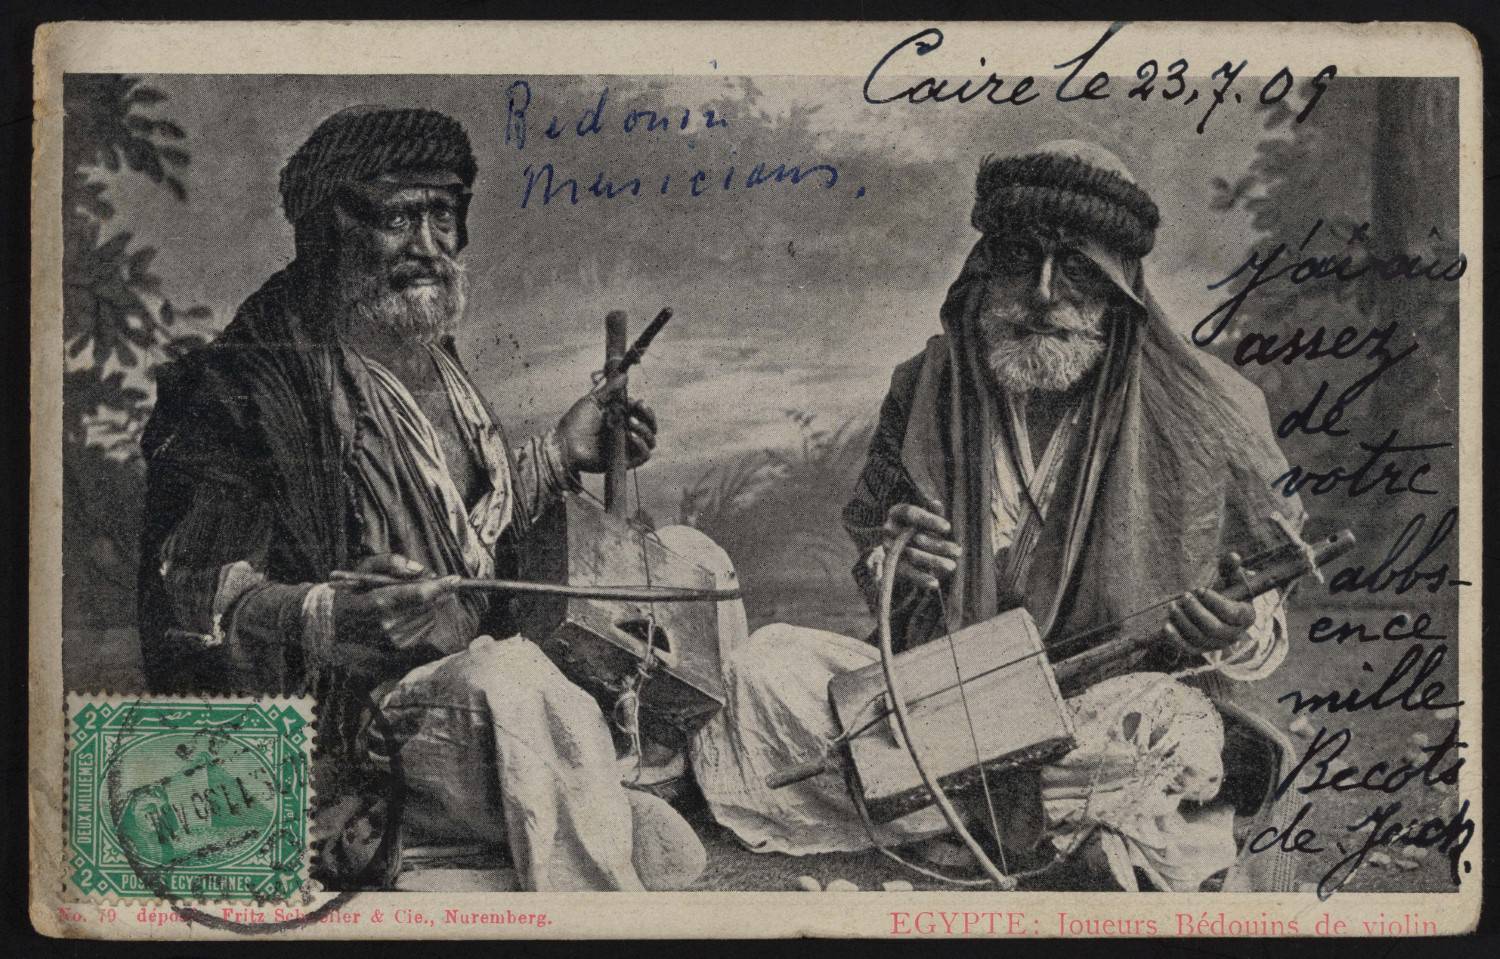 Postcard of Bedouin Musicians, July 23, 1909